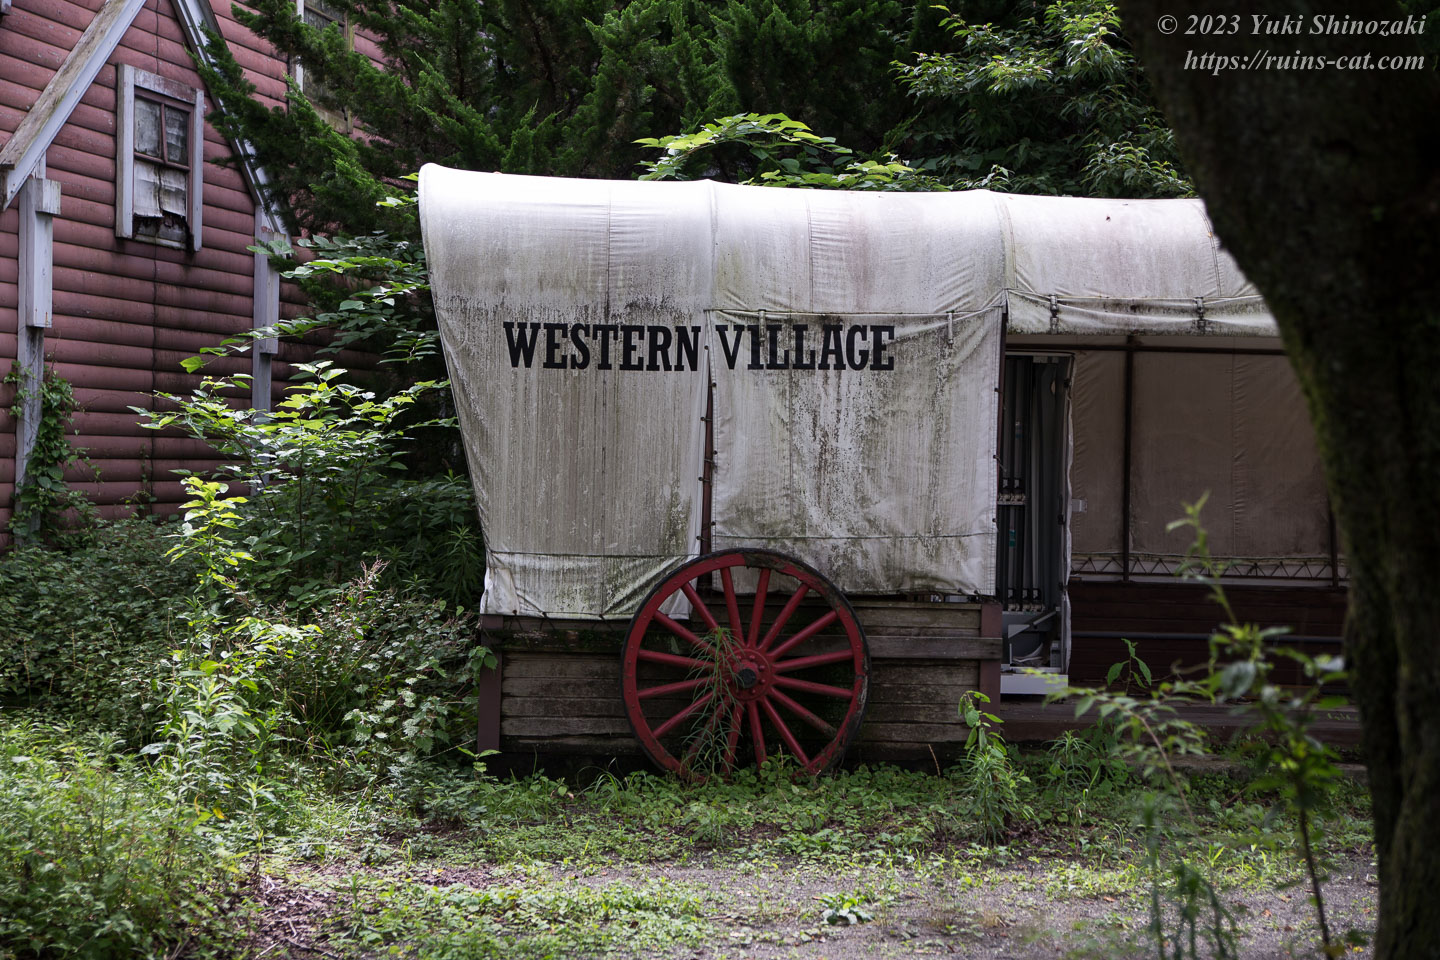 「Western Village」と書かれた幌馬車